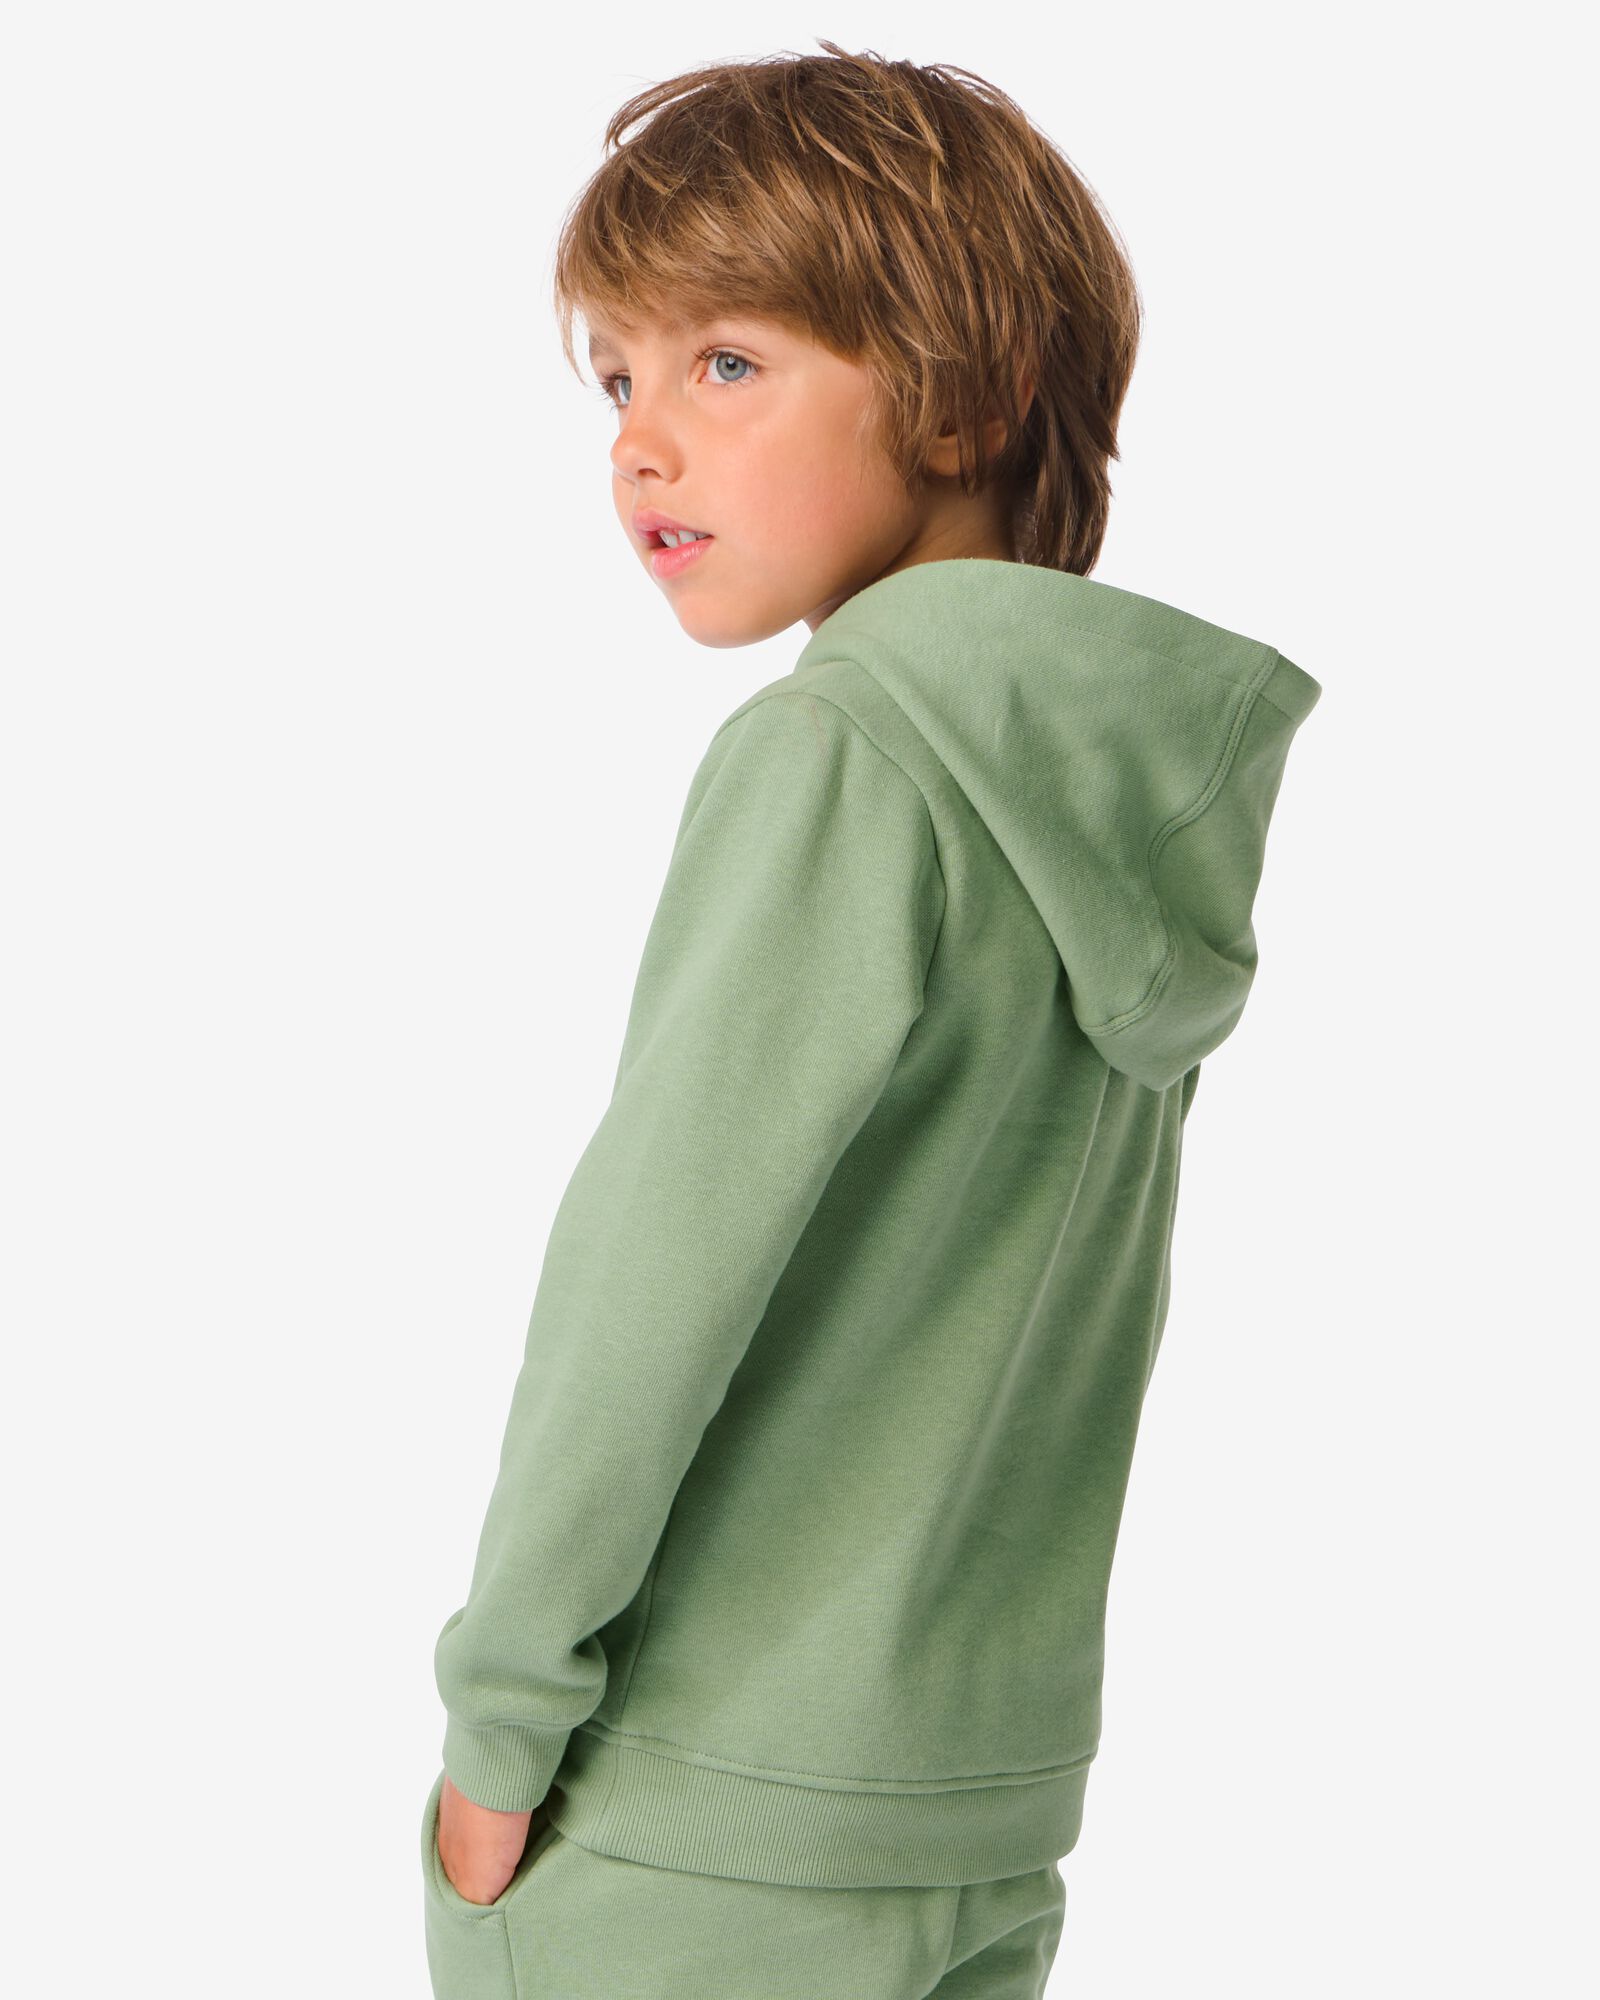 kinder hoodie met kangeroezak groen 122/128 - 30769430 - HEMA